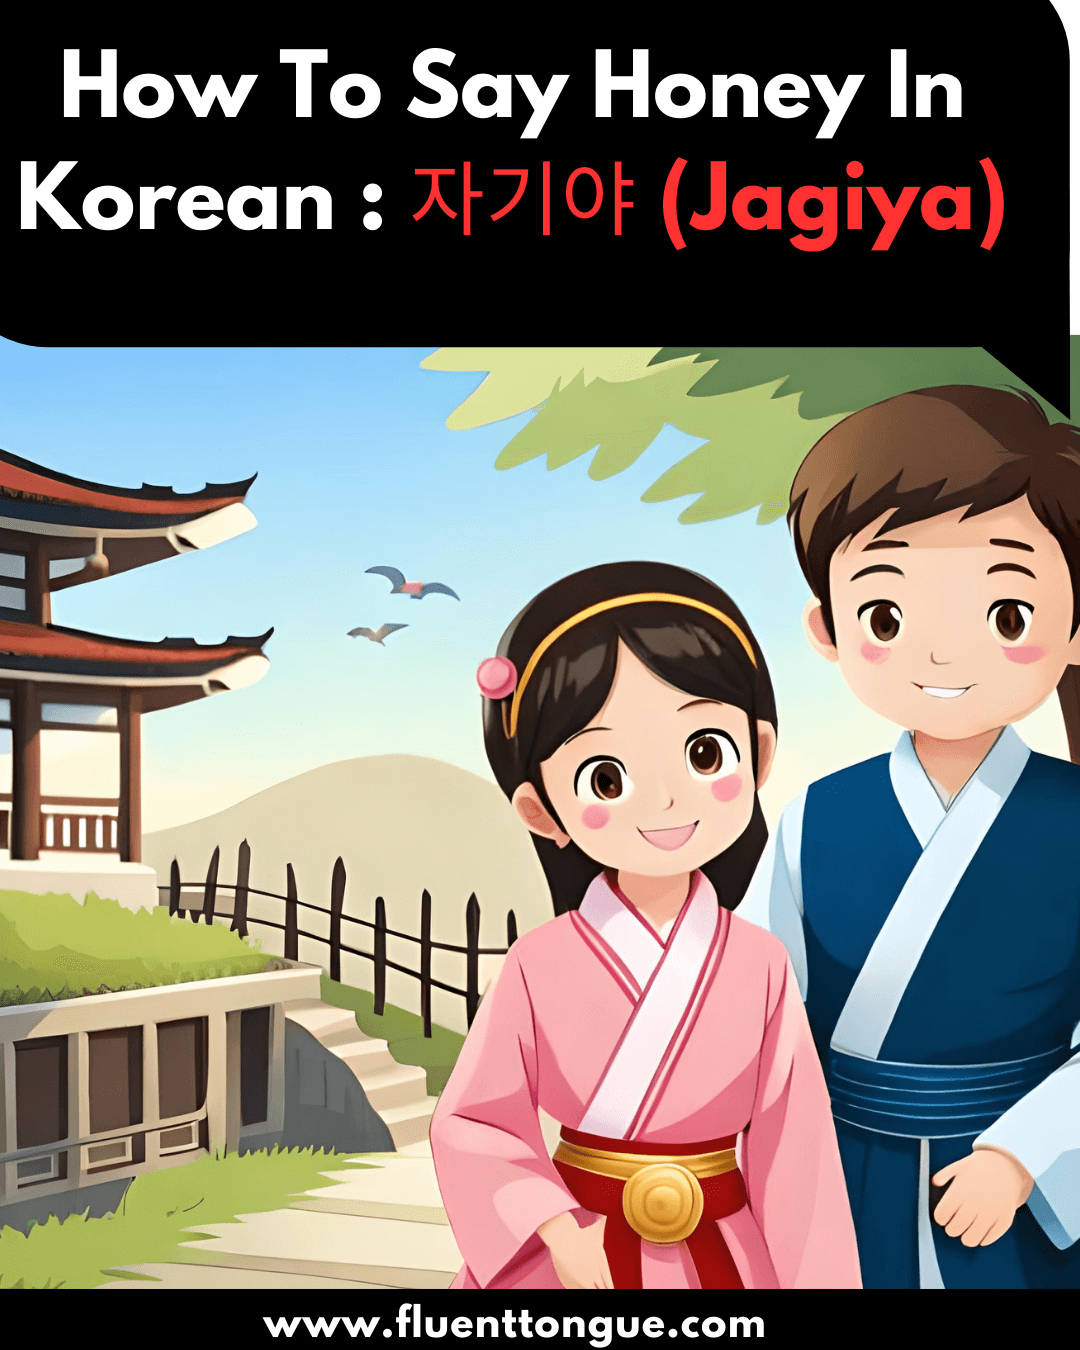 how to say Honey in Korean: 자기야 (jagiya)